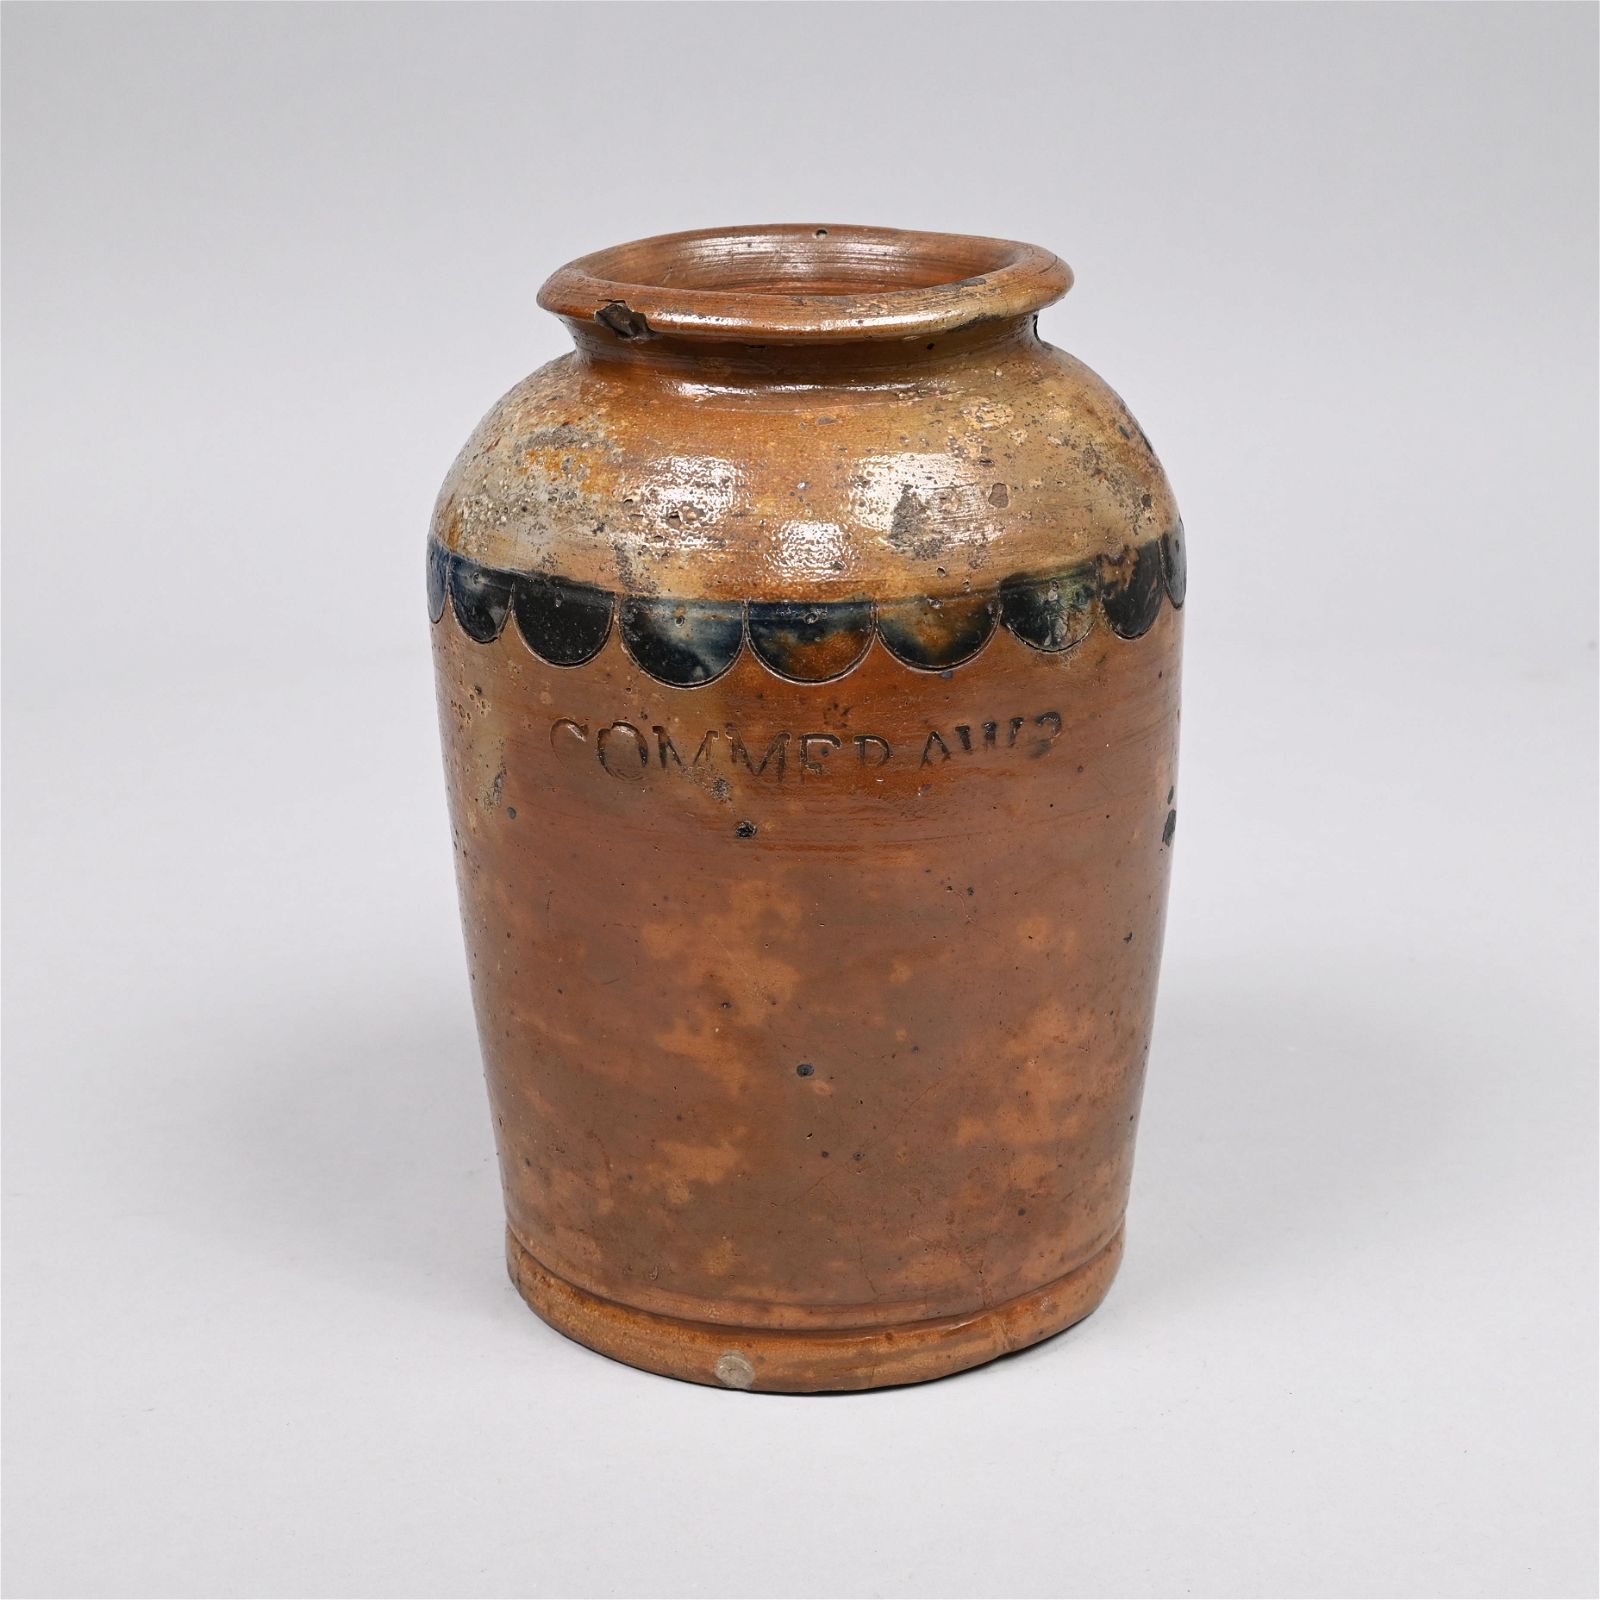 Rare Thomas Commeraw Stoneware Jar, Circa 1815